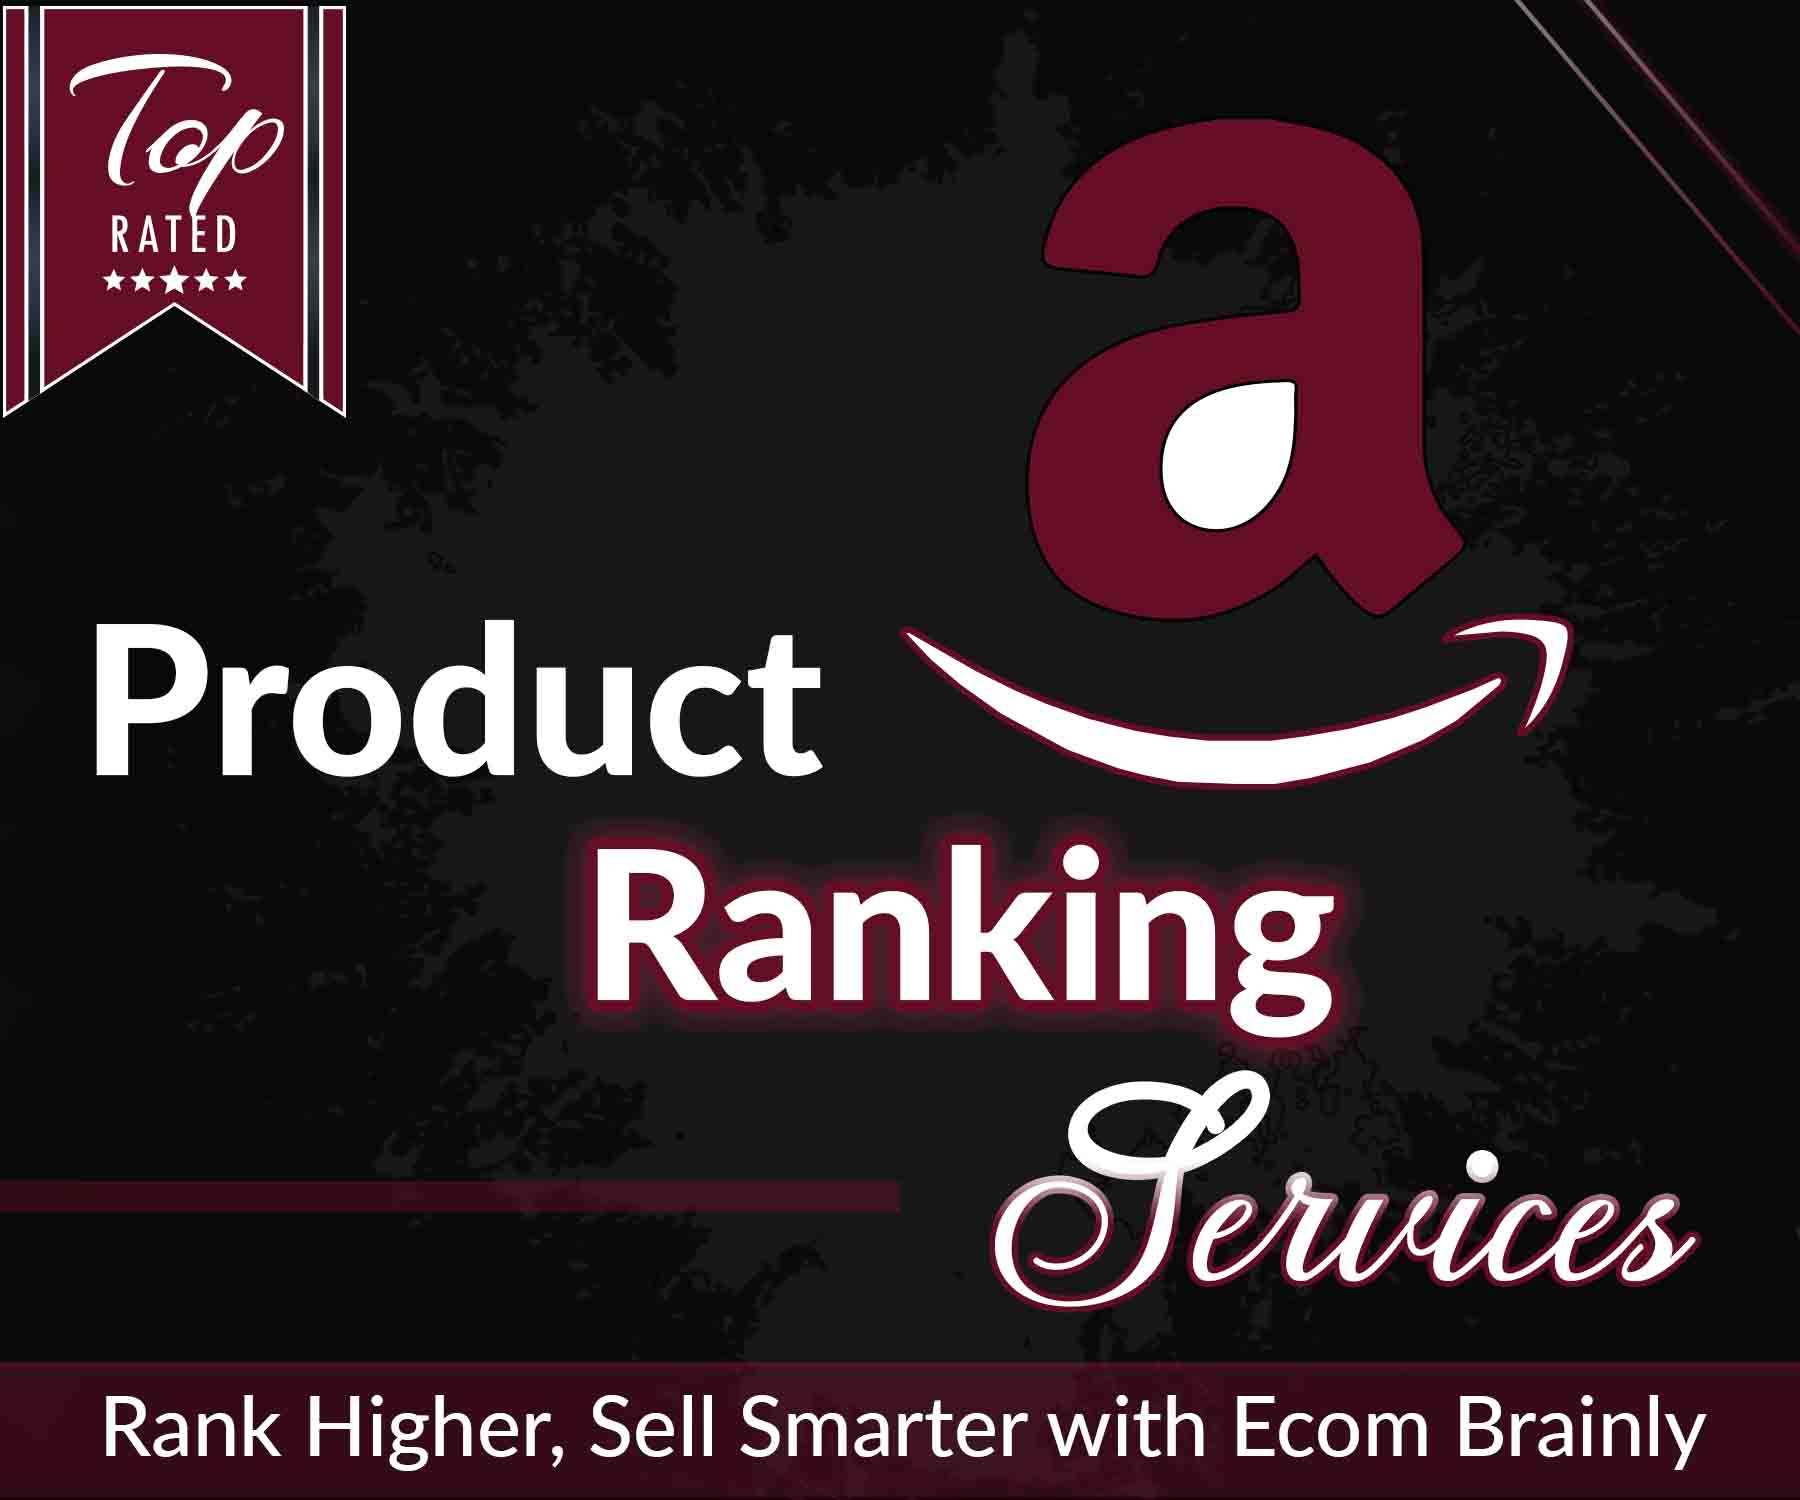 Amazon Product Ranking Services